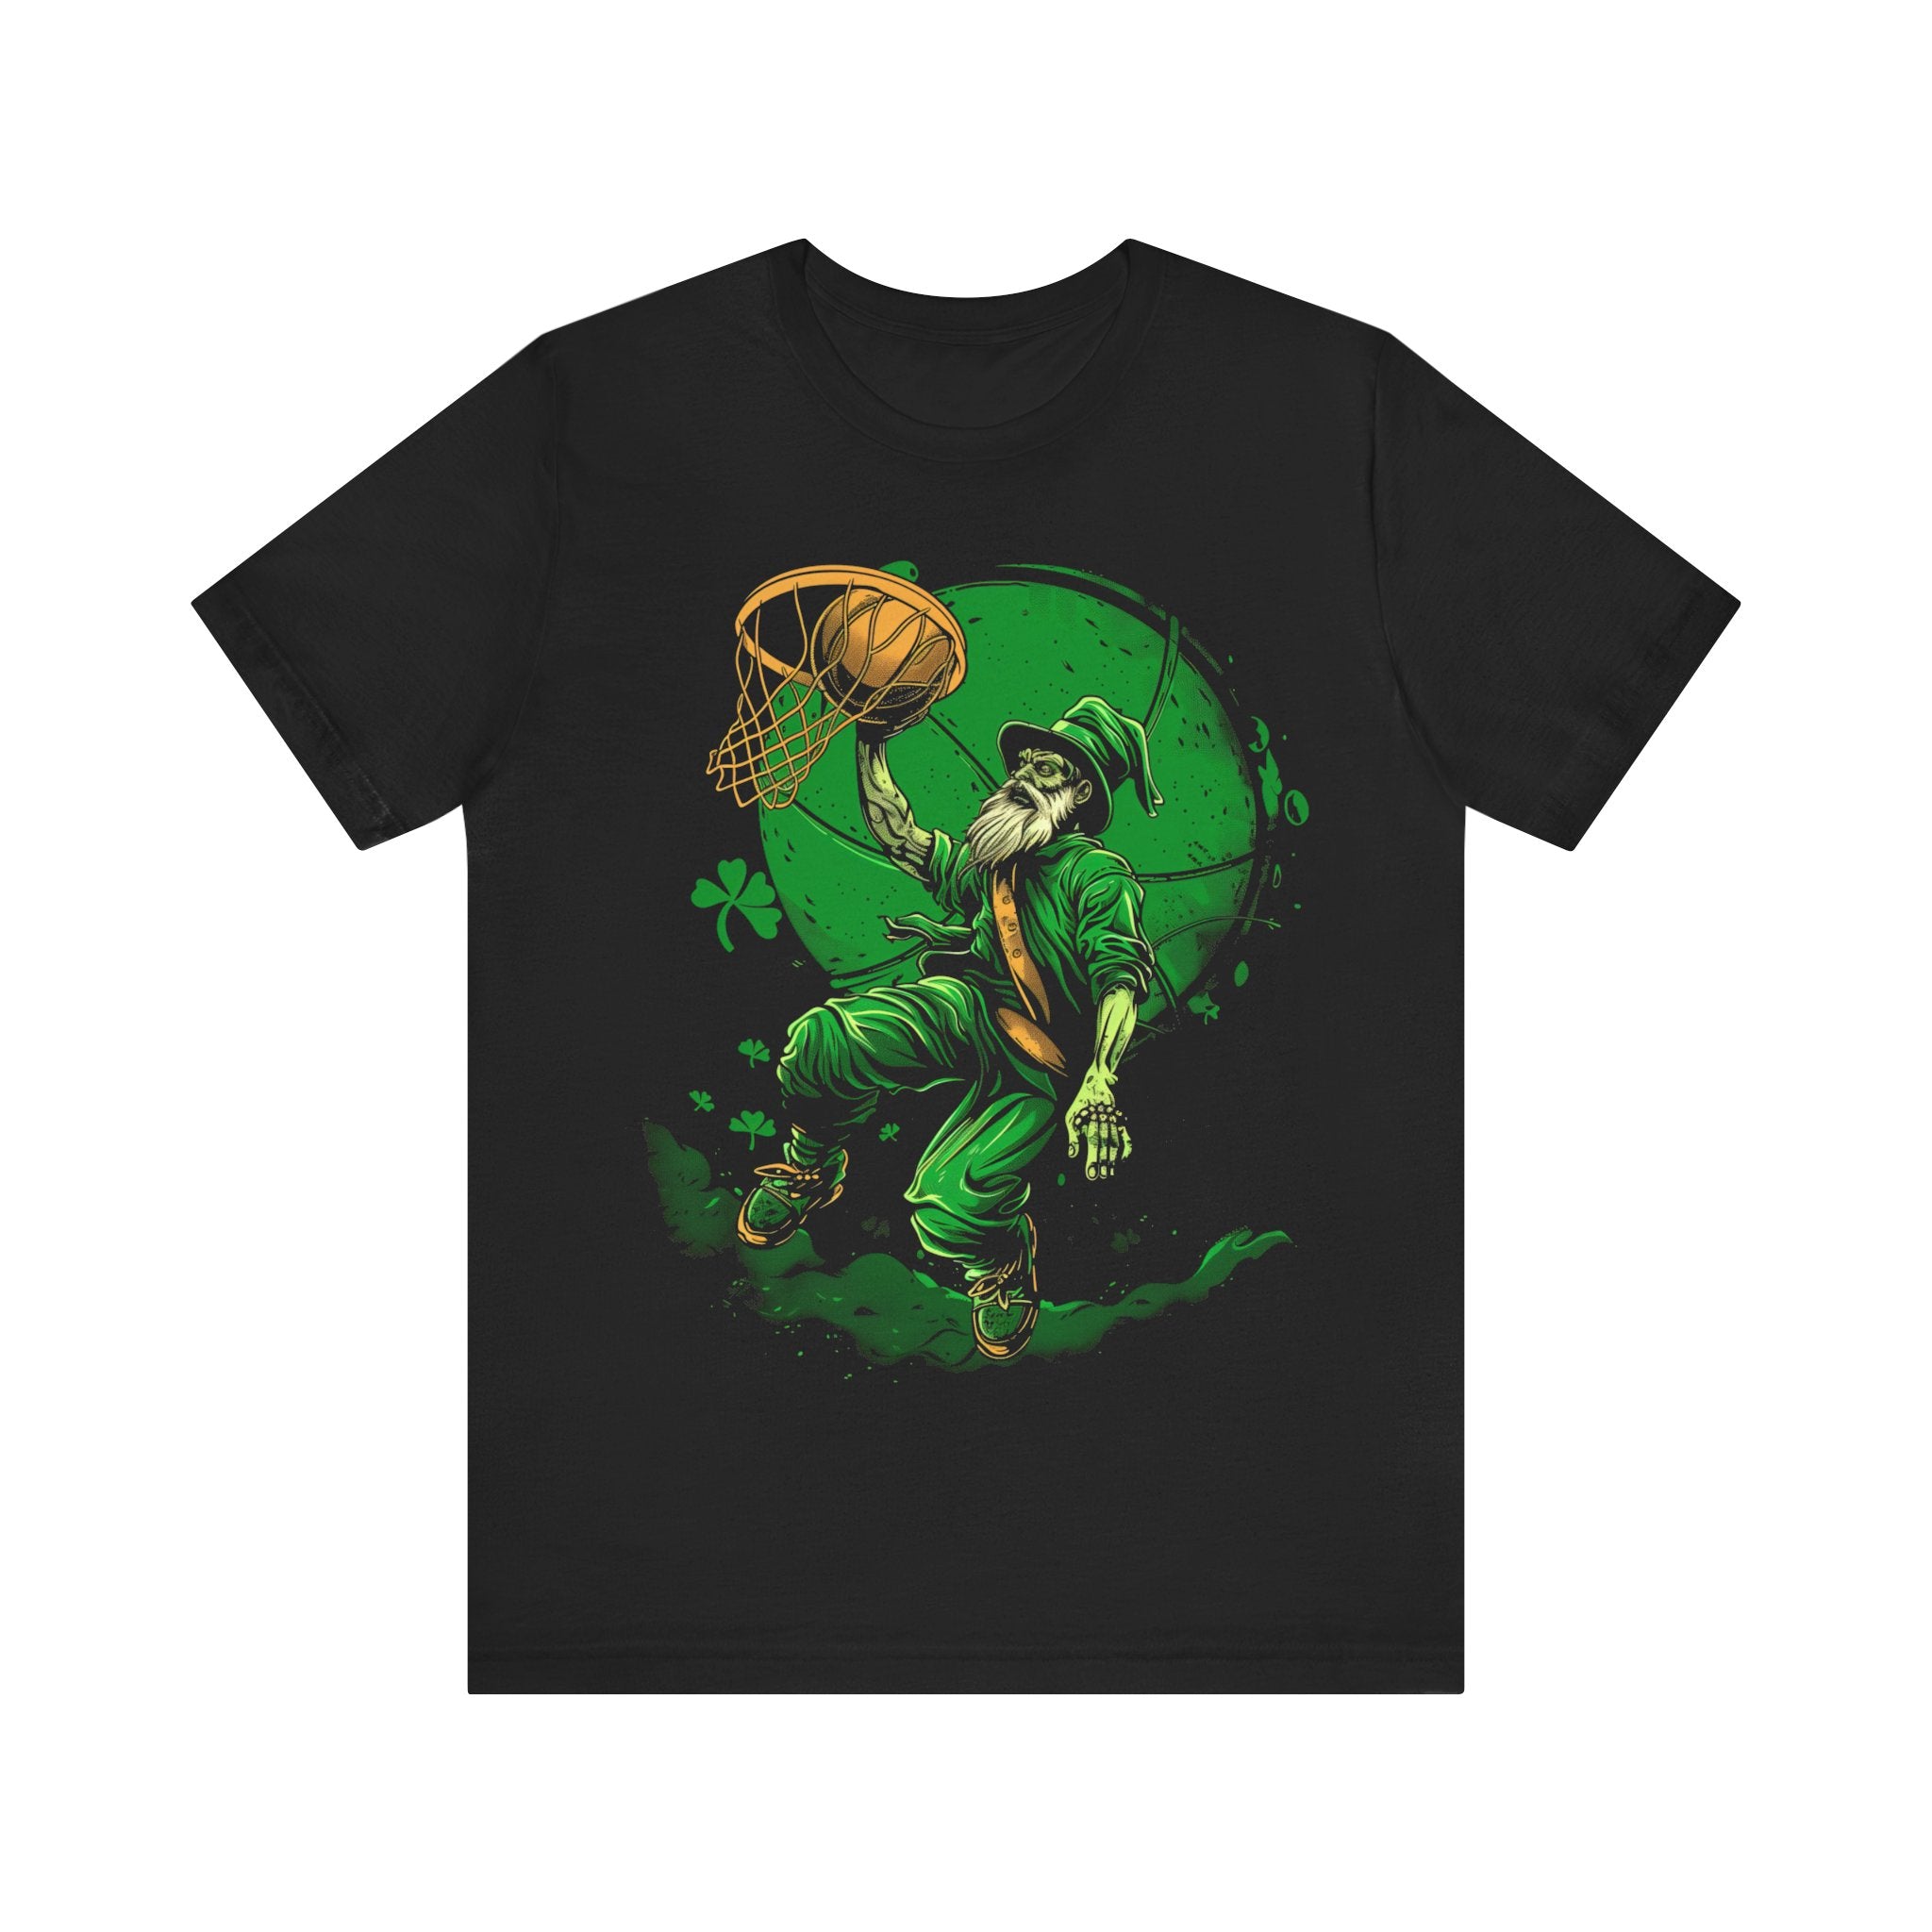 Green FN Irish Edition Slam Dunk T-Shirt: Viral Meme-Inspired Sports Tee with Perfect Shot Graphic & Eye-Catching Splash Design